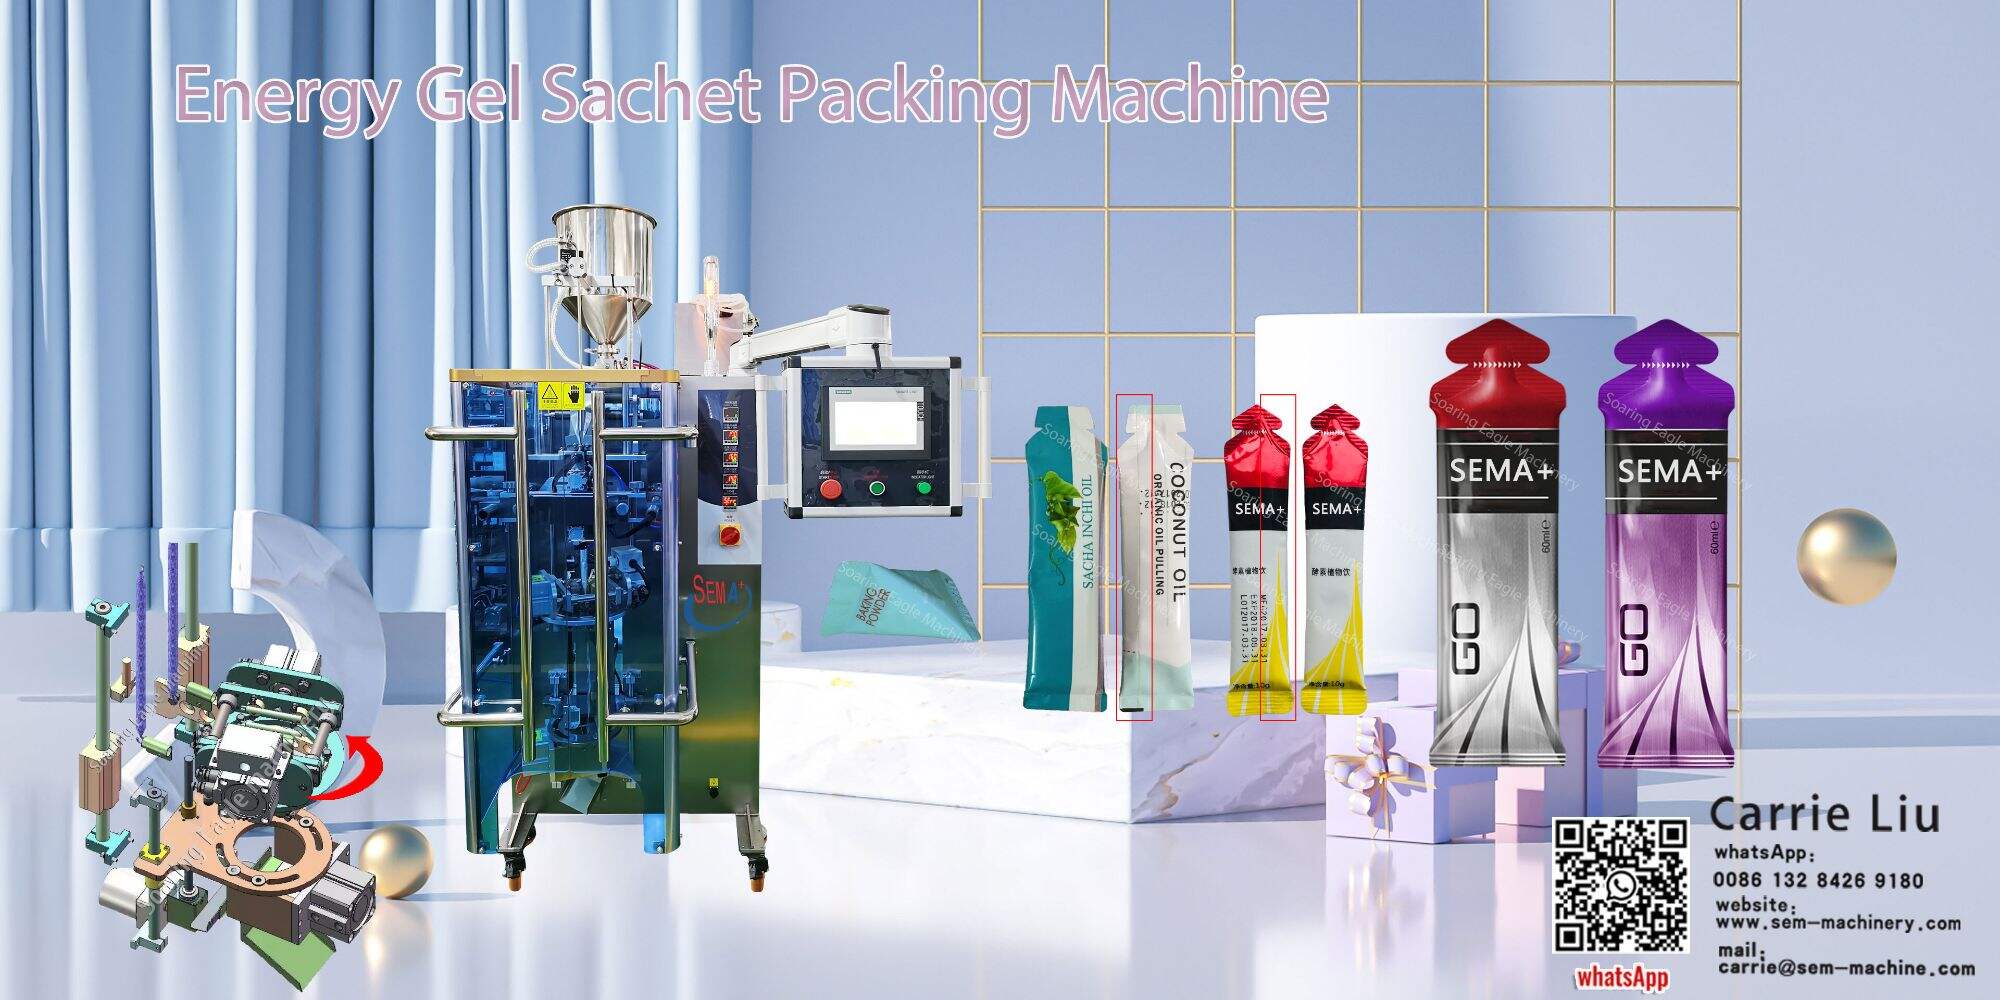 Hoge kwaliteit energie gel zakje verpakkingsmachine